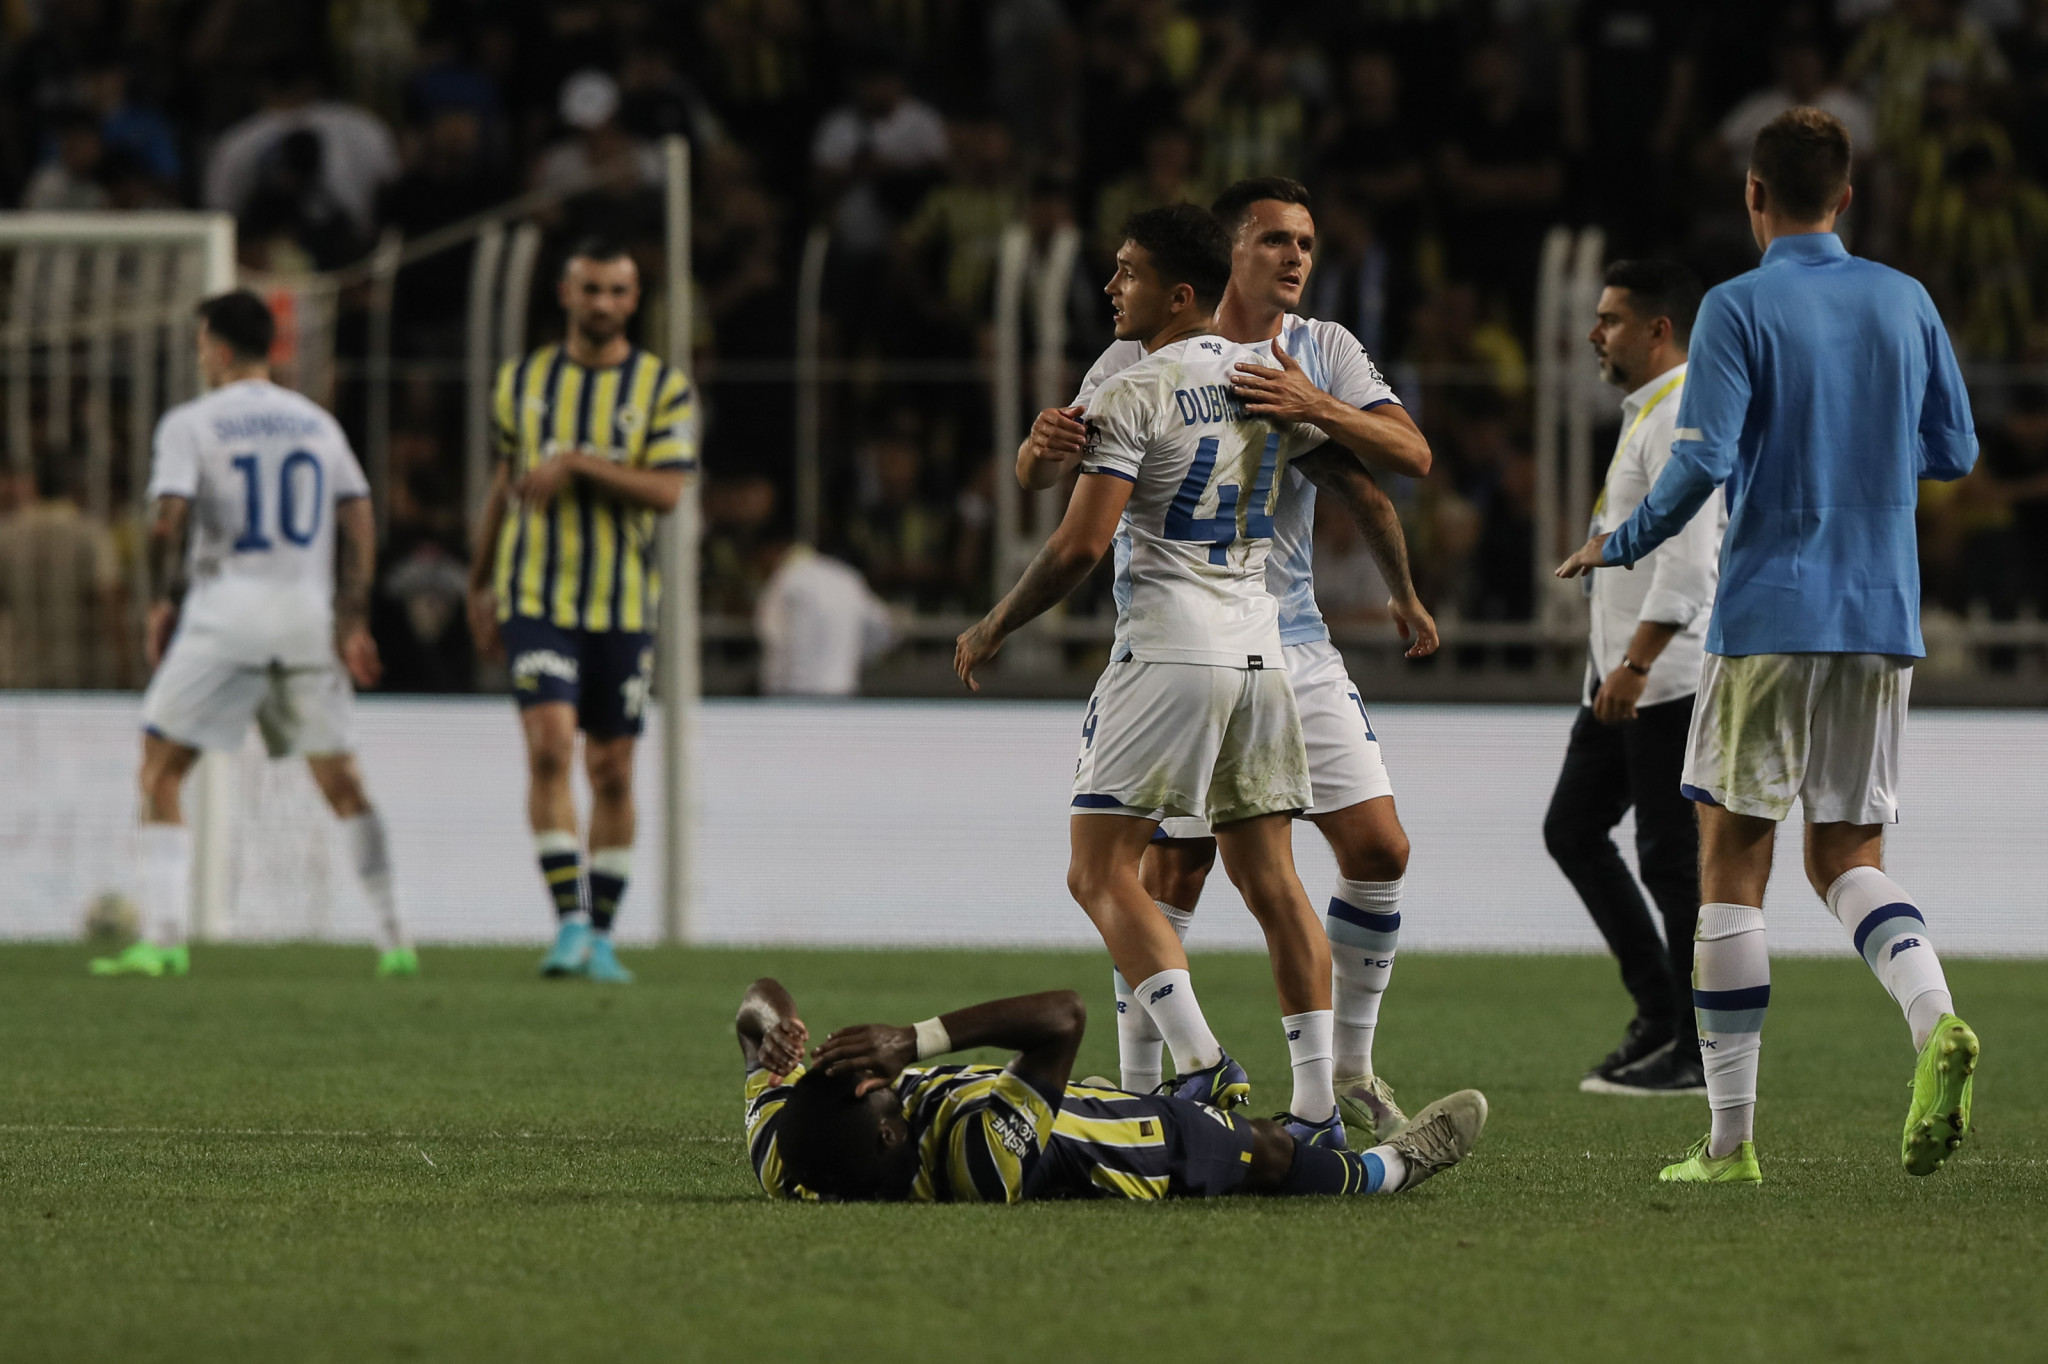 Dynamo Kyiv won the match 2-1 against Fenerbahçe ©Getty Images